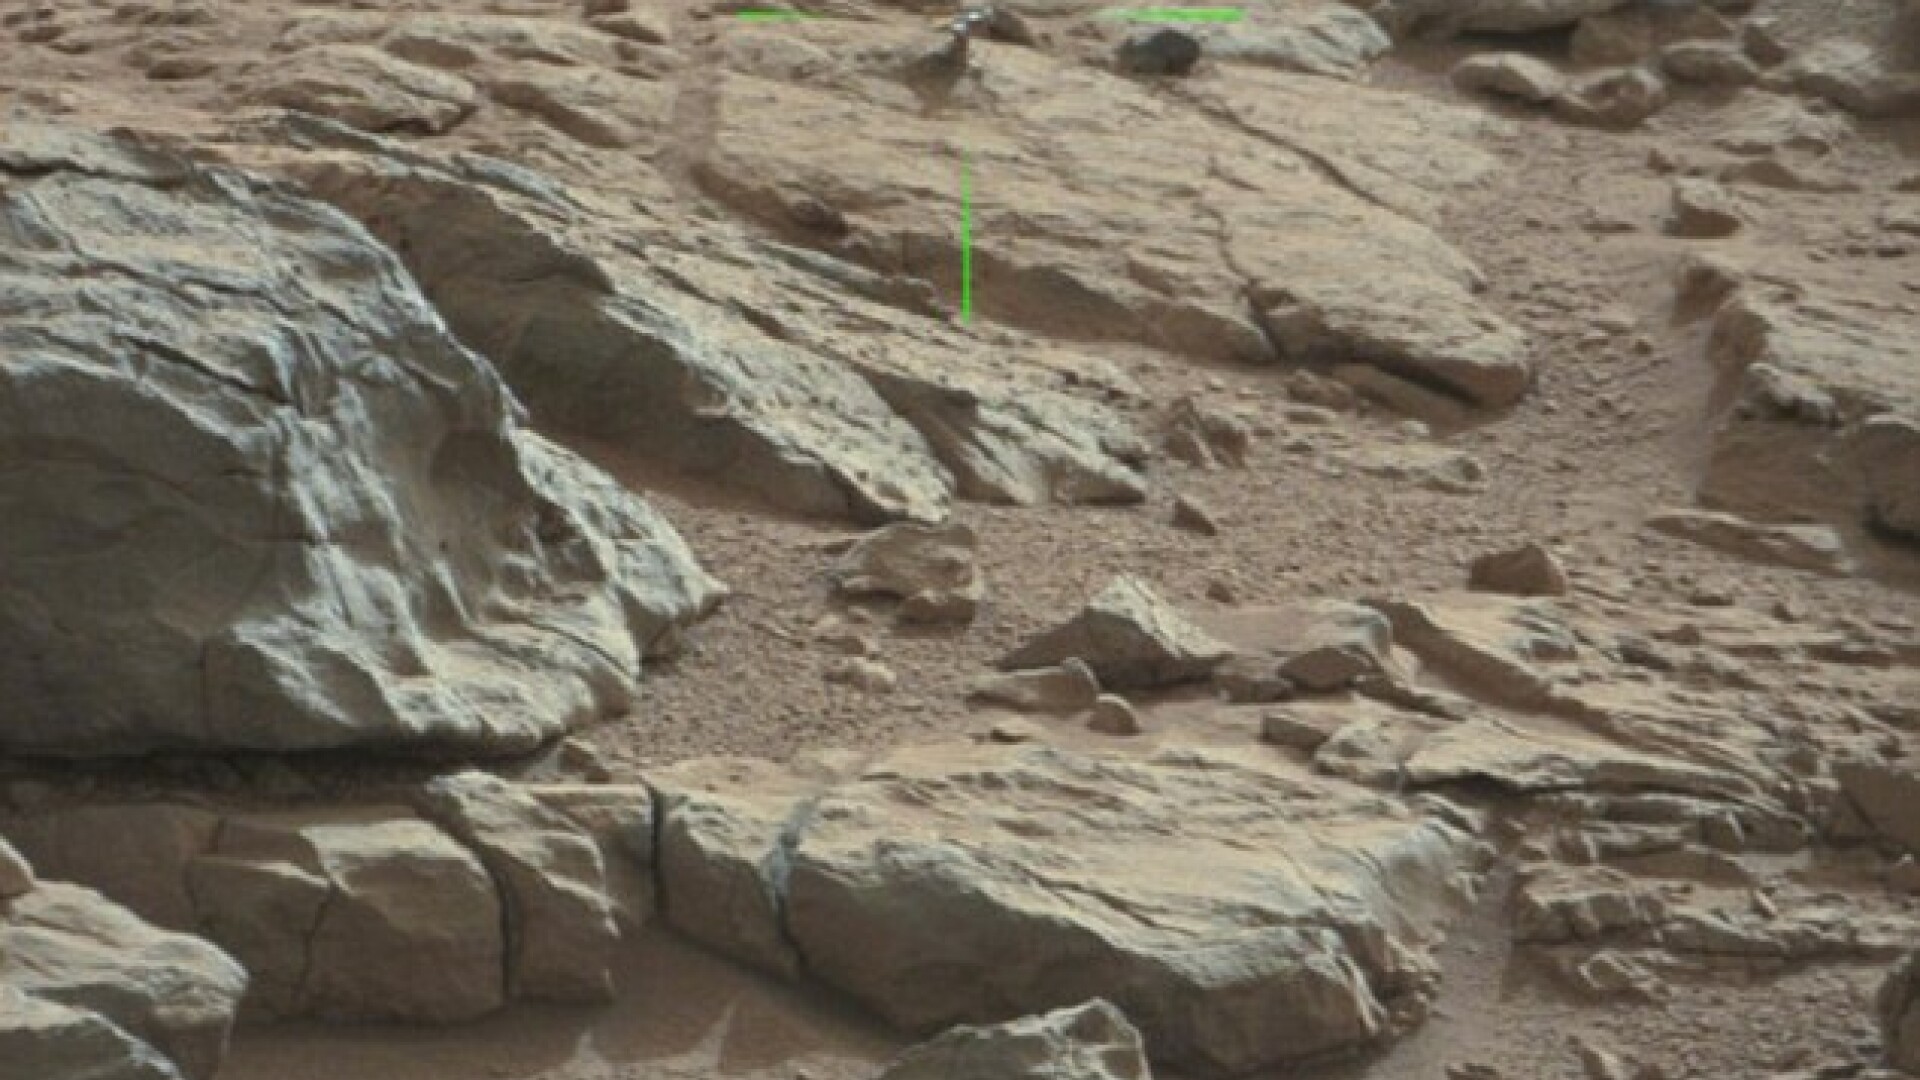 obiect ciudat pe Marte 3